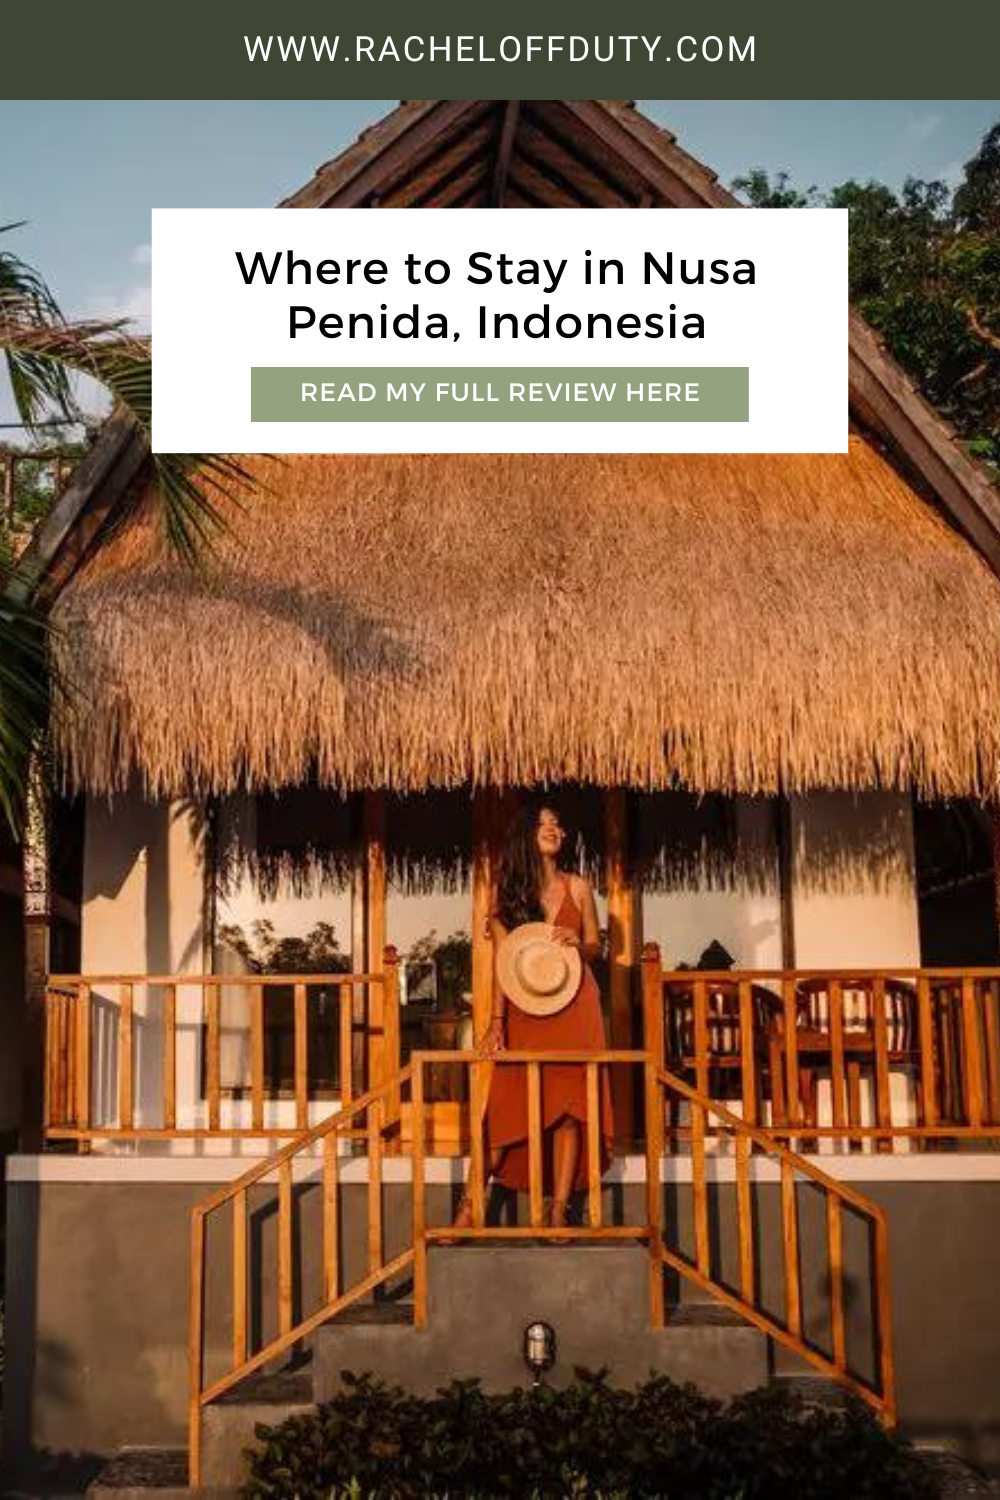 Rachel Off Duty: Sunrise Penida Hill Hotel in Nusa Penida